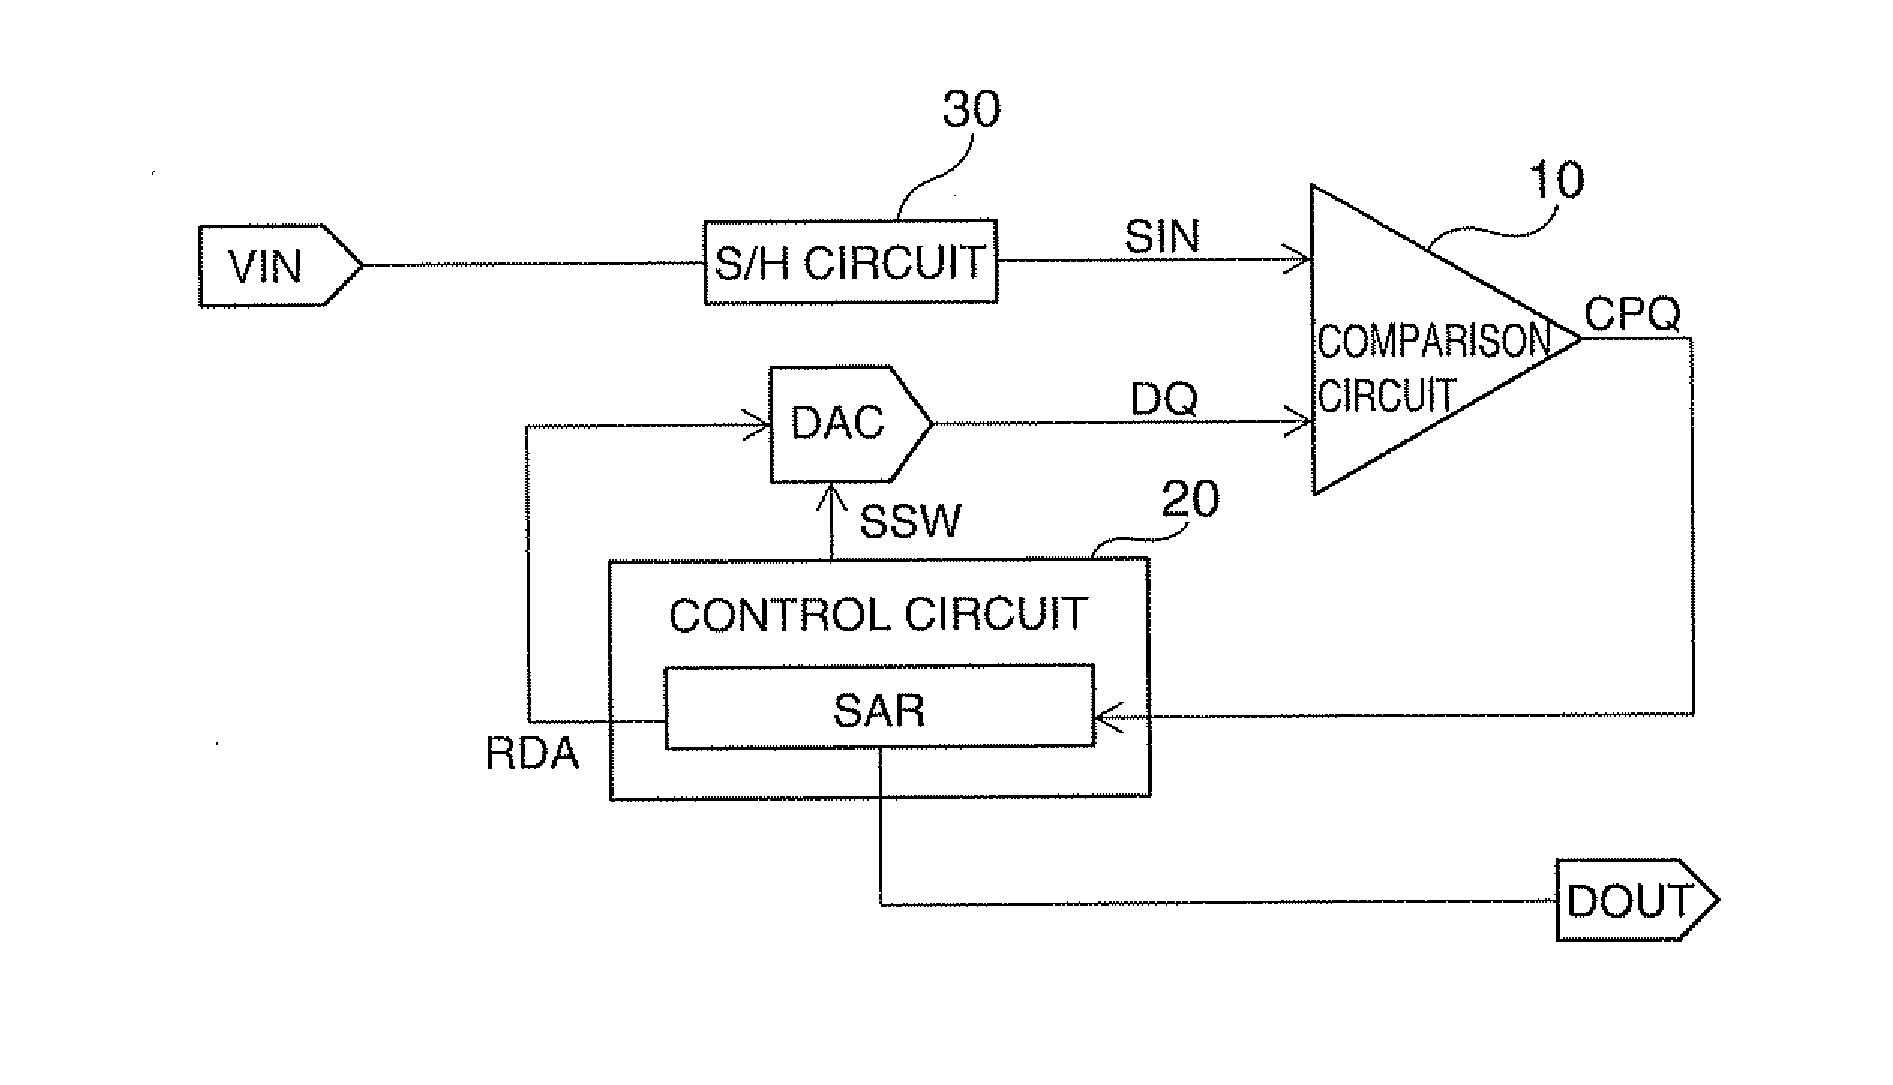 D/a conversion circuit, a/d conversion circuit and electronic apparatus